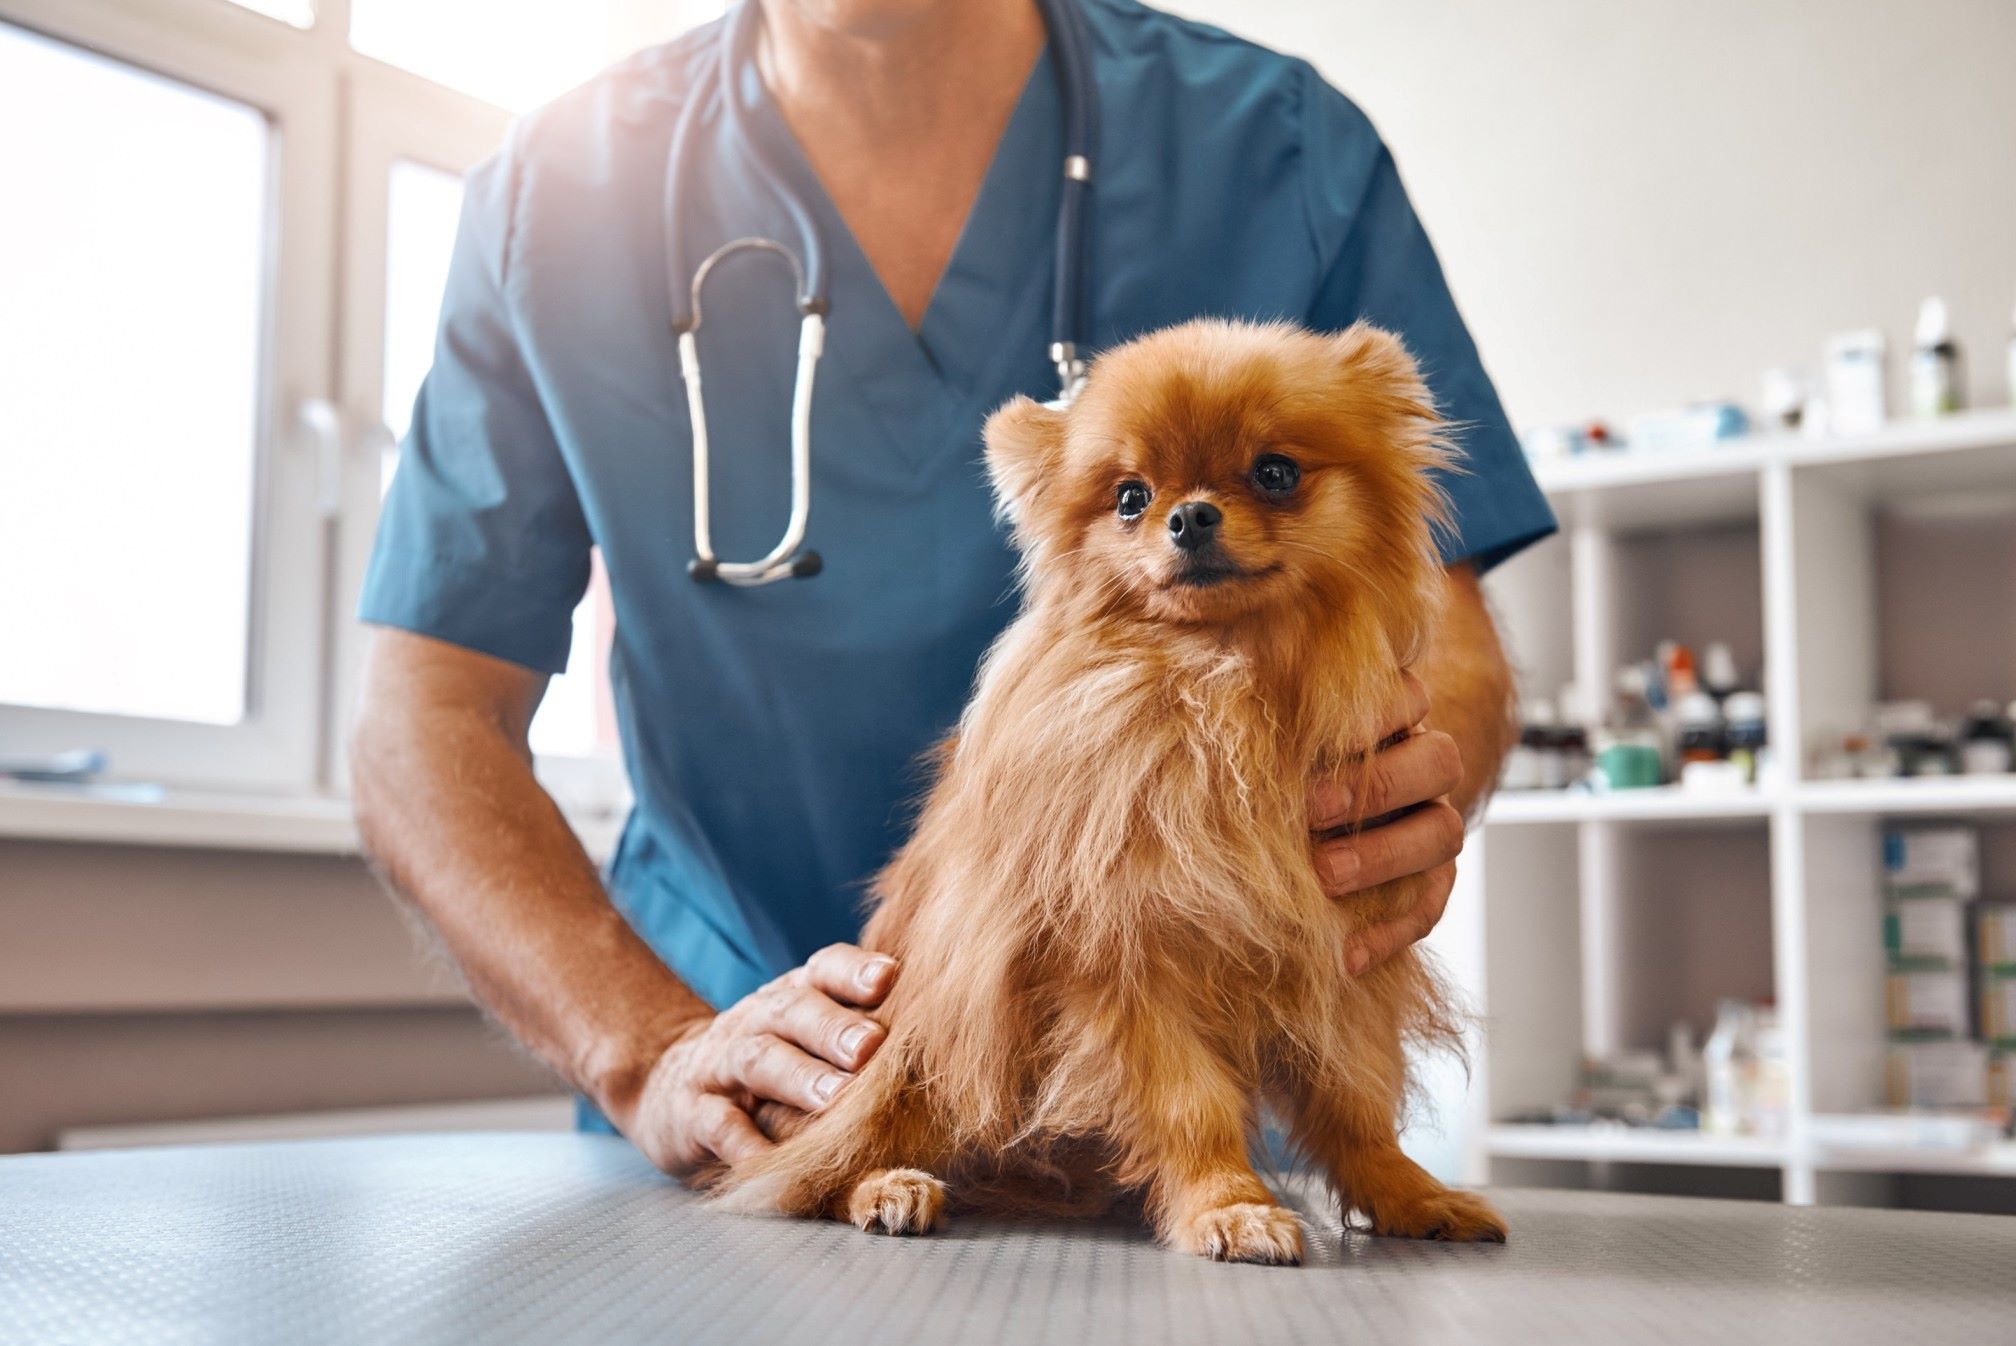 A vet examining a dog at their clinic